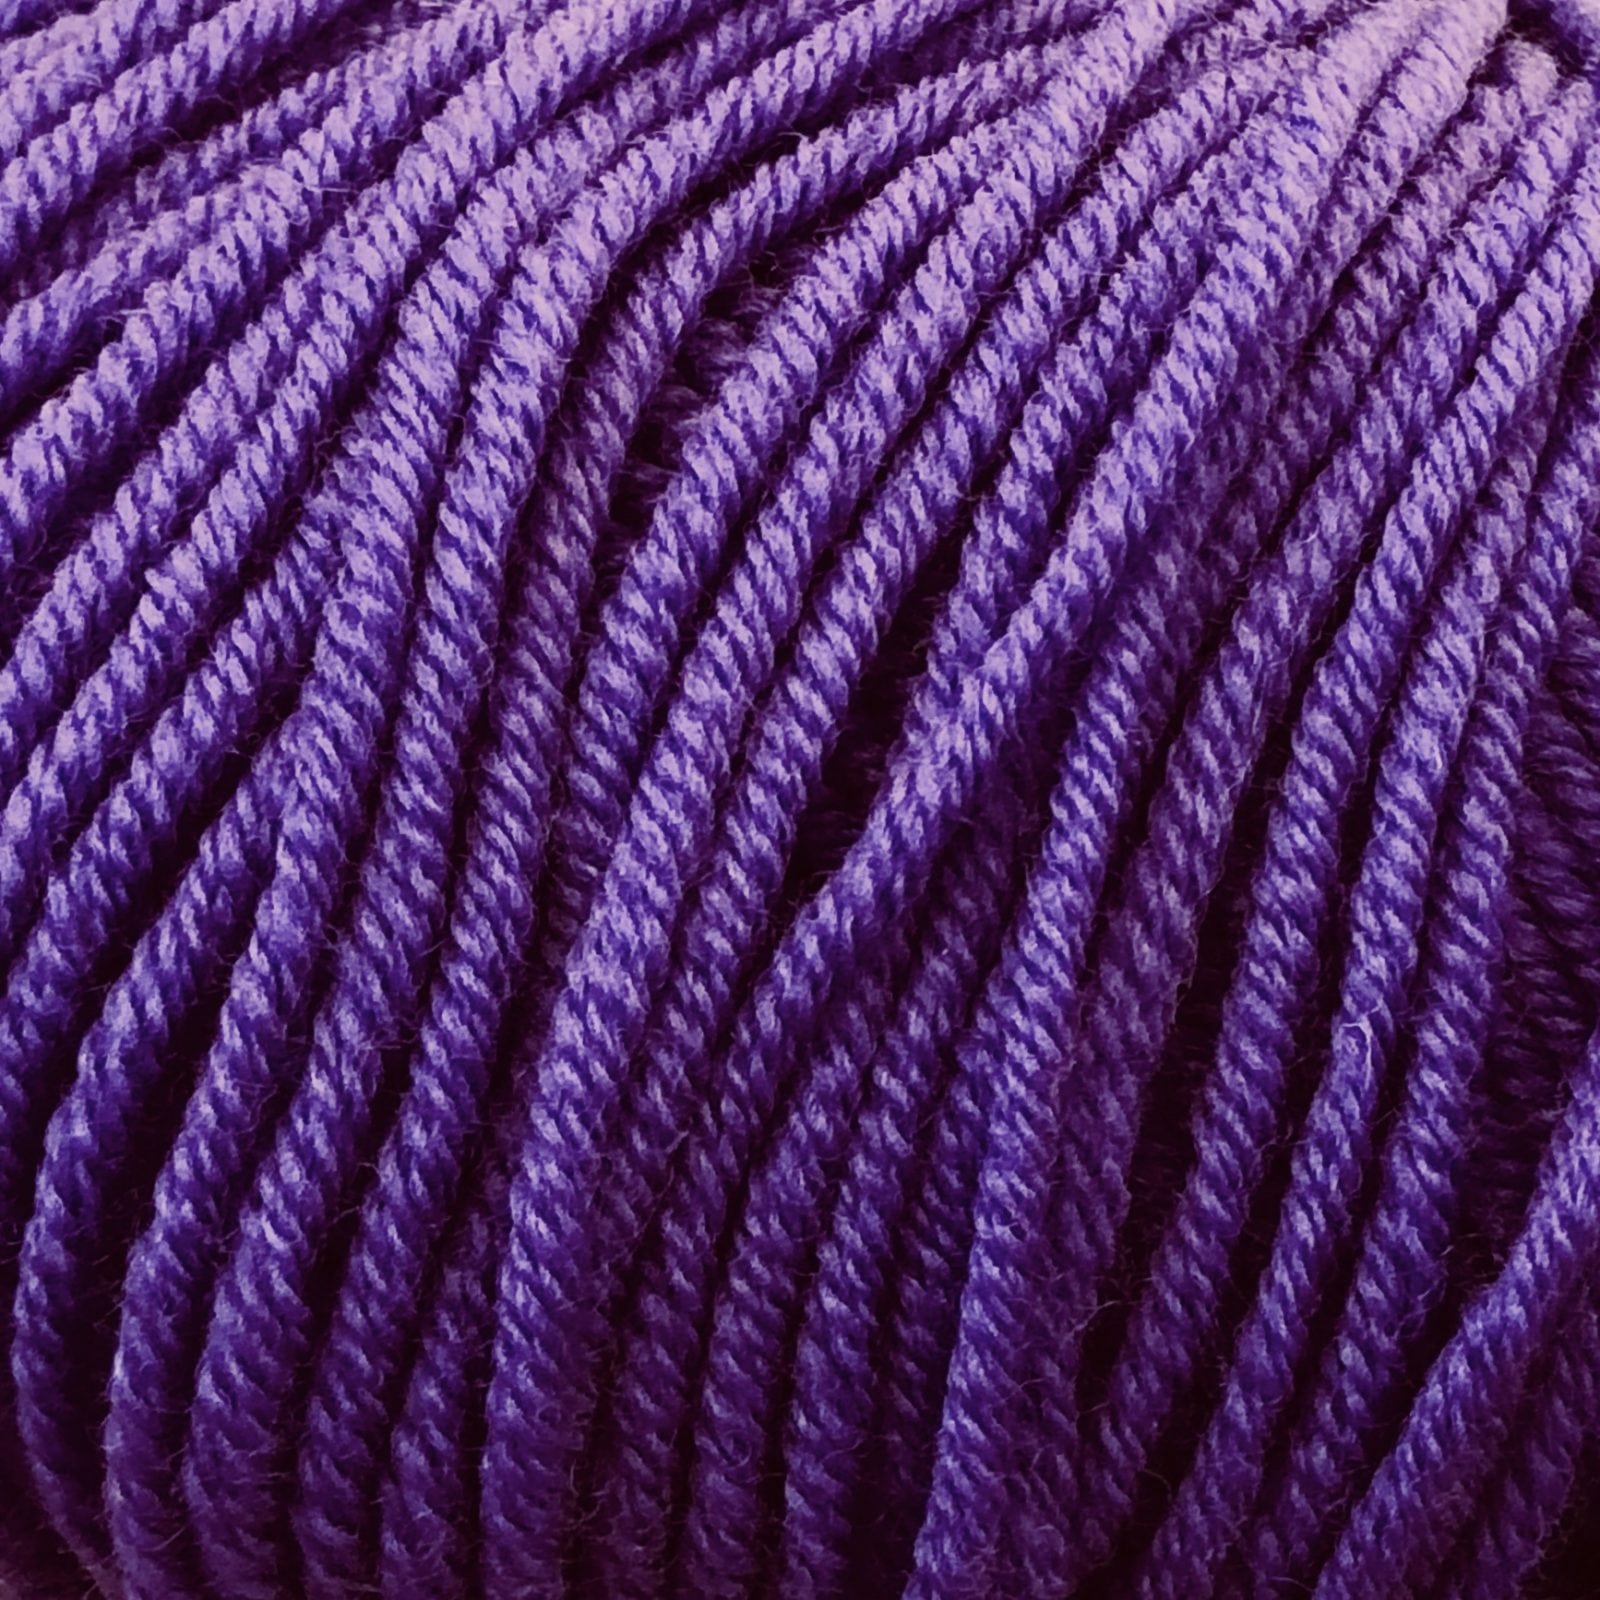 Broadway Yarns Merino 8ply double knit shade 332